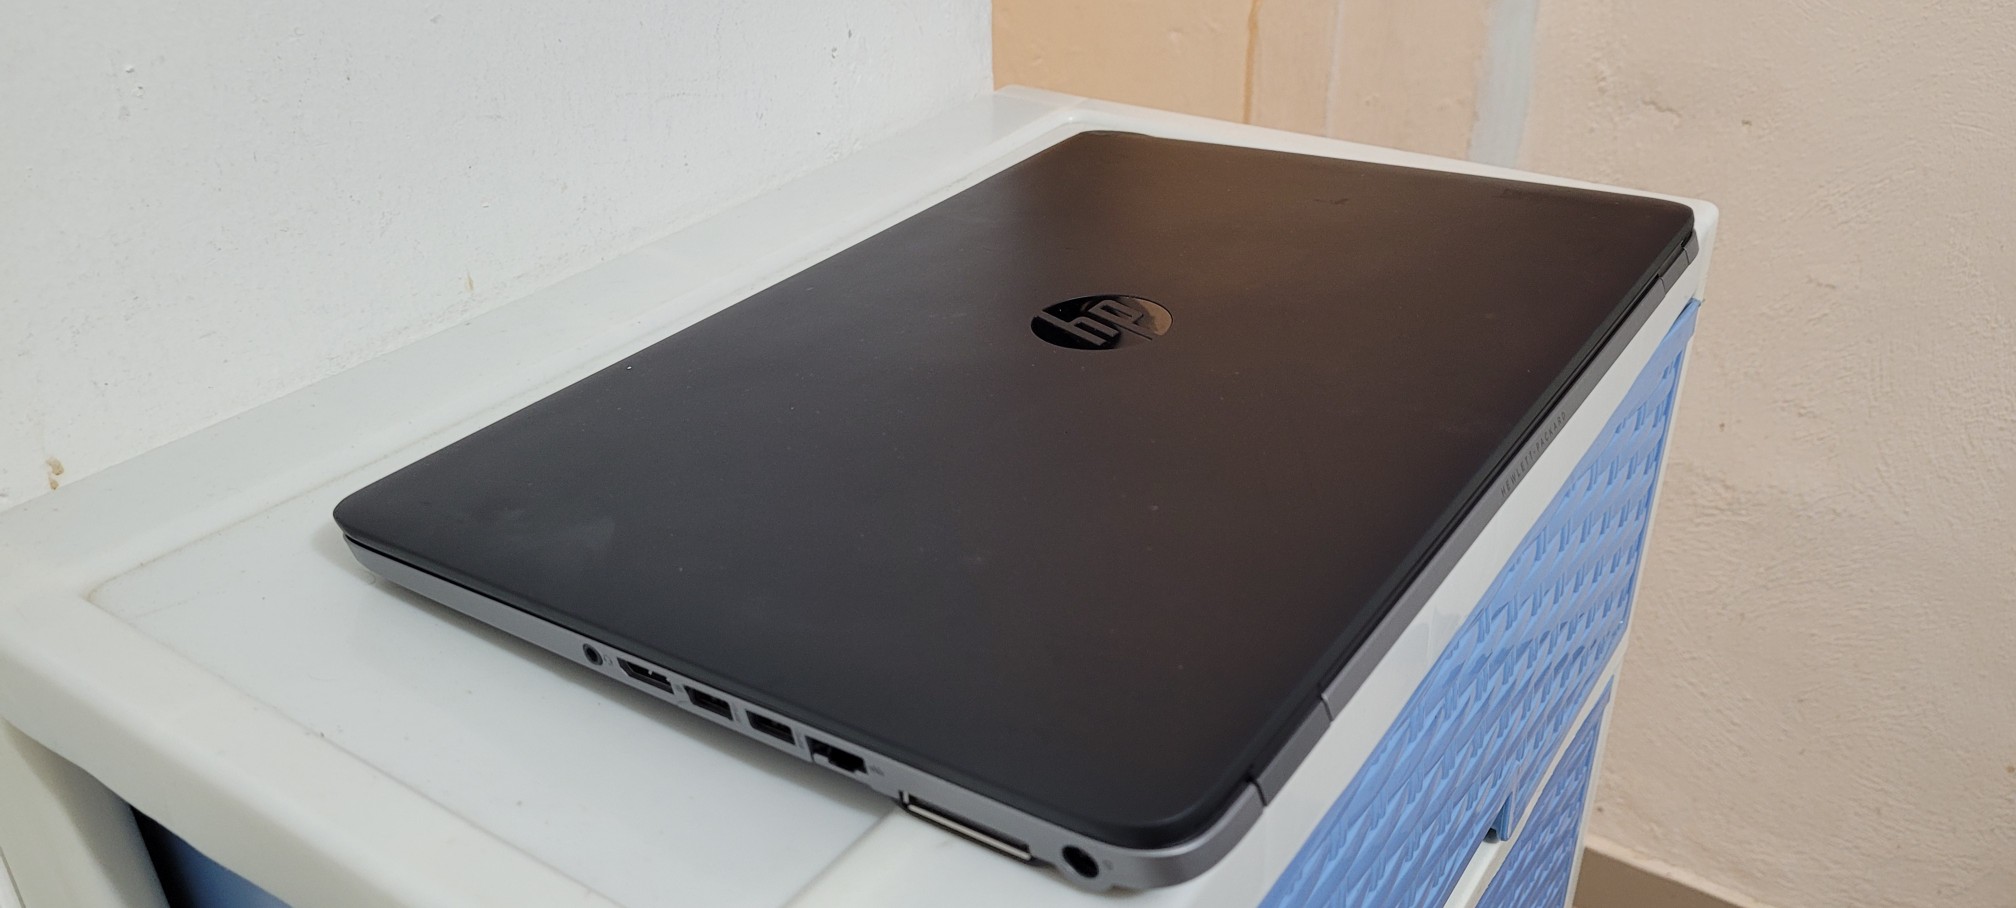 computadoras y laptops - laptop hp probook 17 Pulg Core i5 6ta Gen Ram 8gb ddr4 Disco 256gb SSD NEW 2